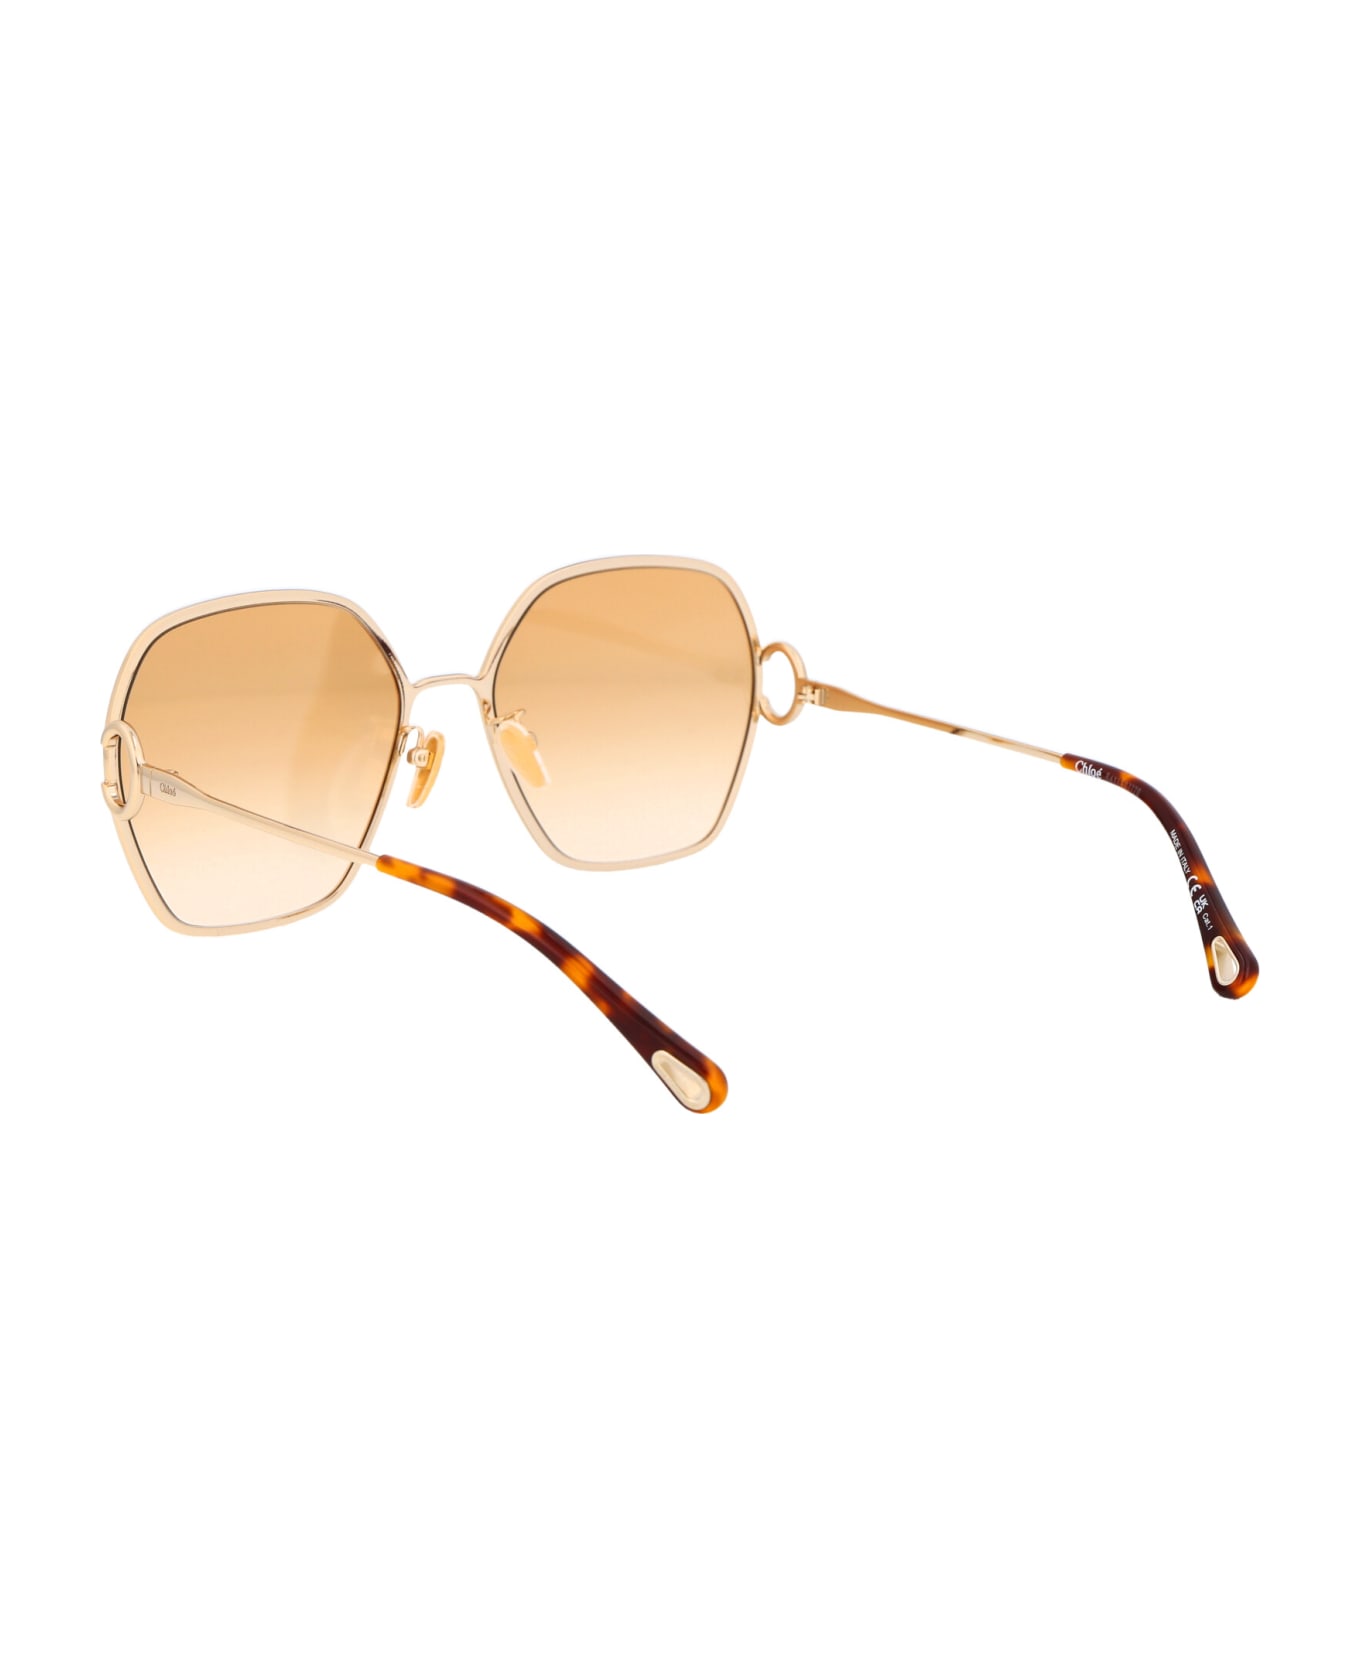 Chloé Eyewear Ch0146s Sunglasses - 006 GOLD GOLD ORANGE